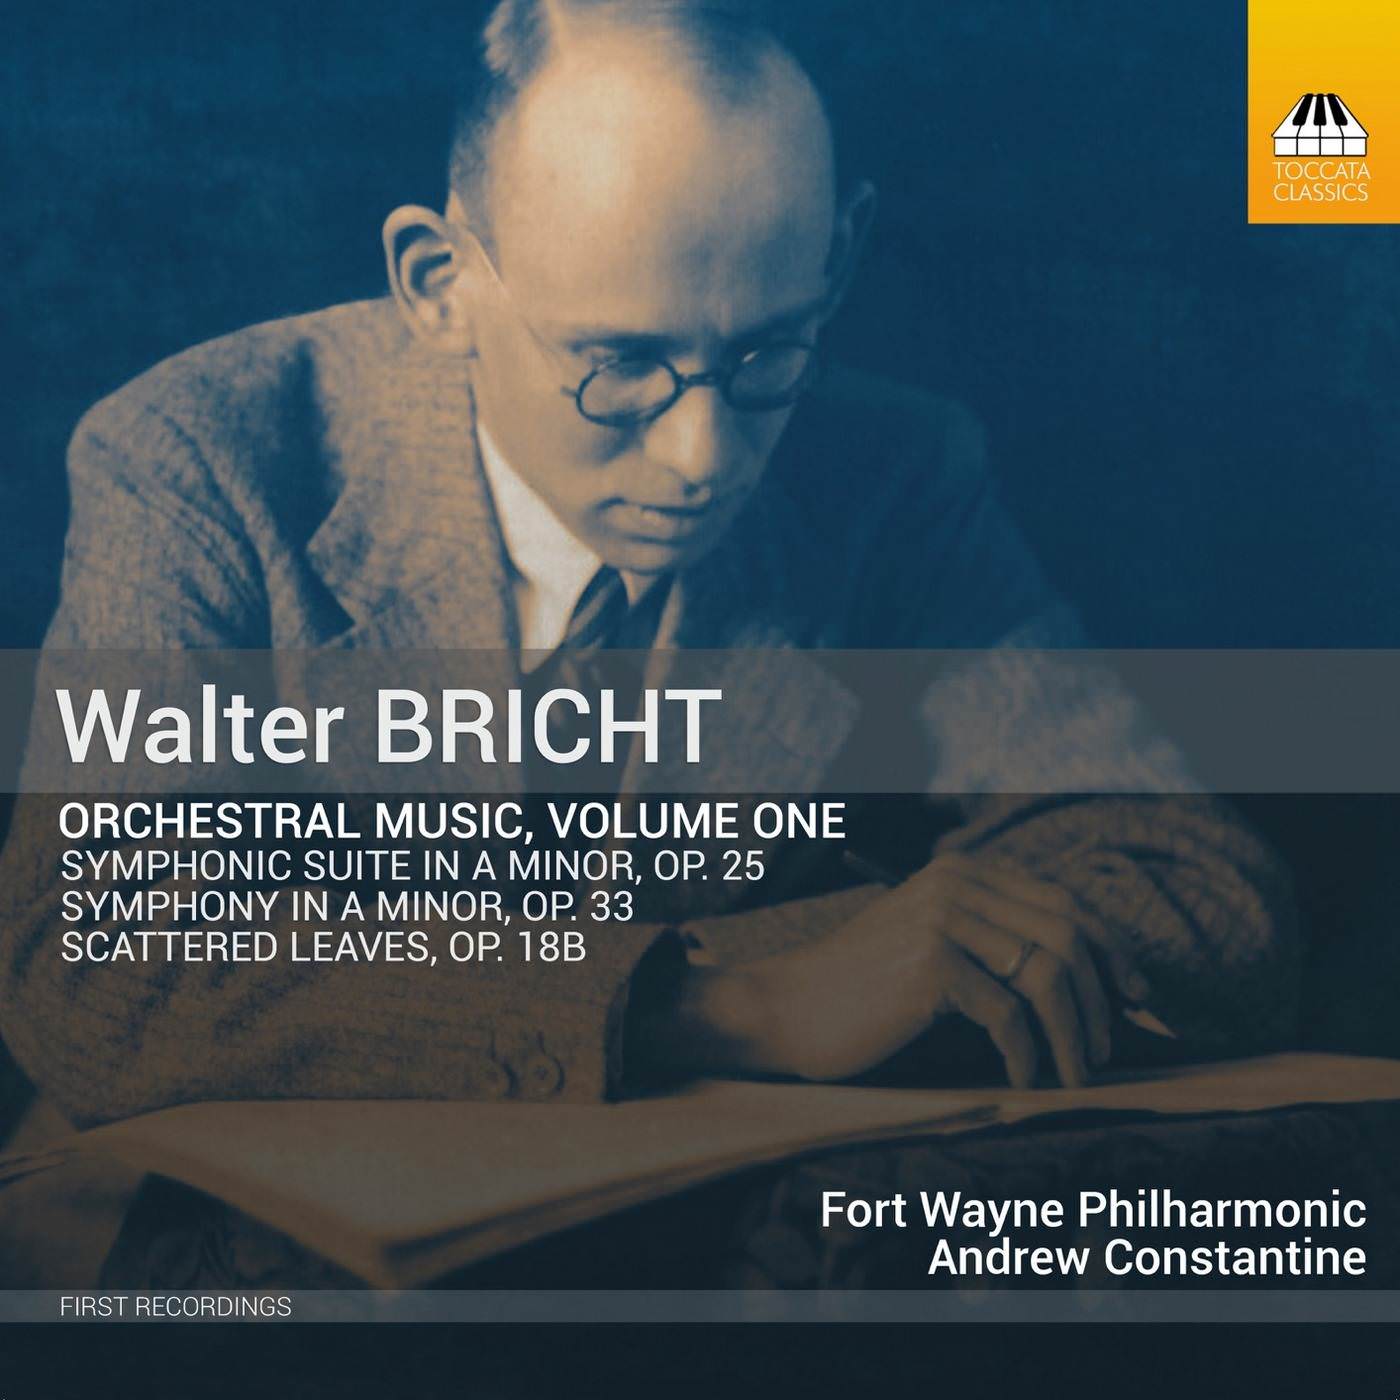 Fort Wayne Philharmonic & Andrew Constantine - Bricht: Orchestral Music, Vol. 1 (2018) [FLAC 24bit/96kHz]